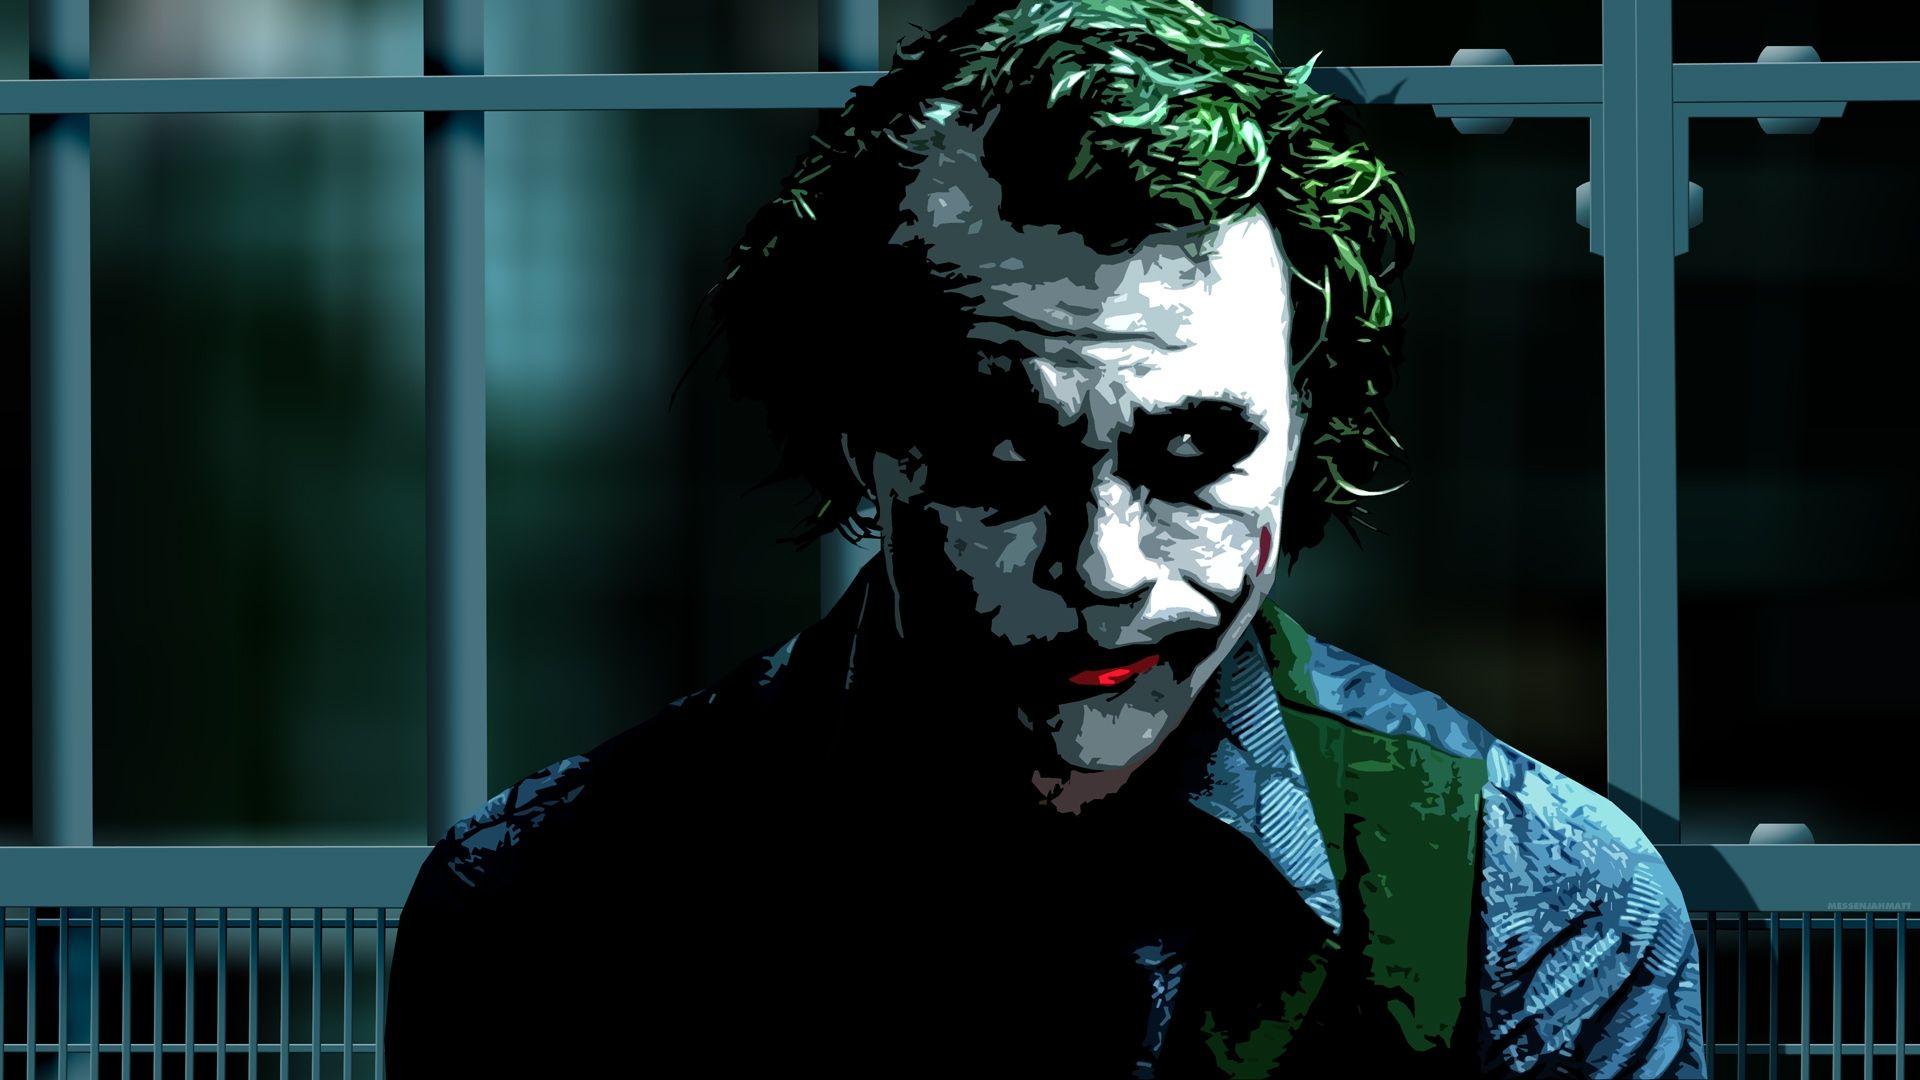 Download 1920x1080 The Dark Knight, Joker, Heath Ledger, Painting